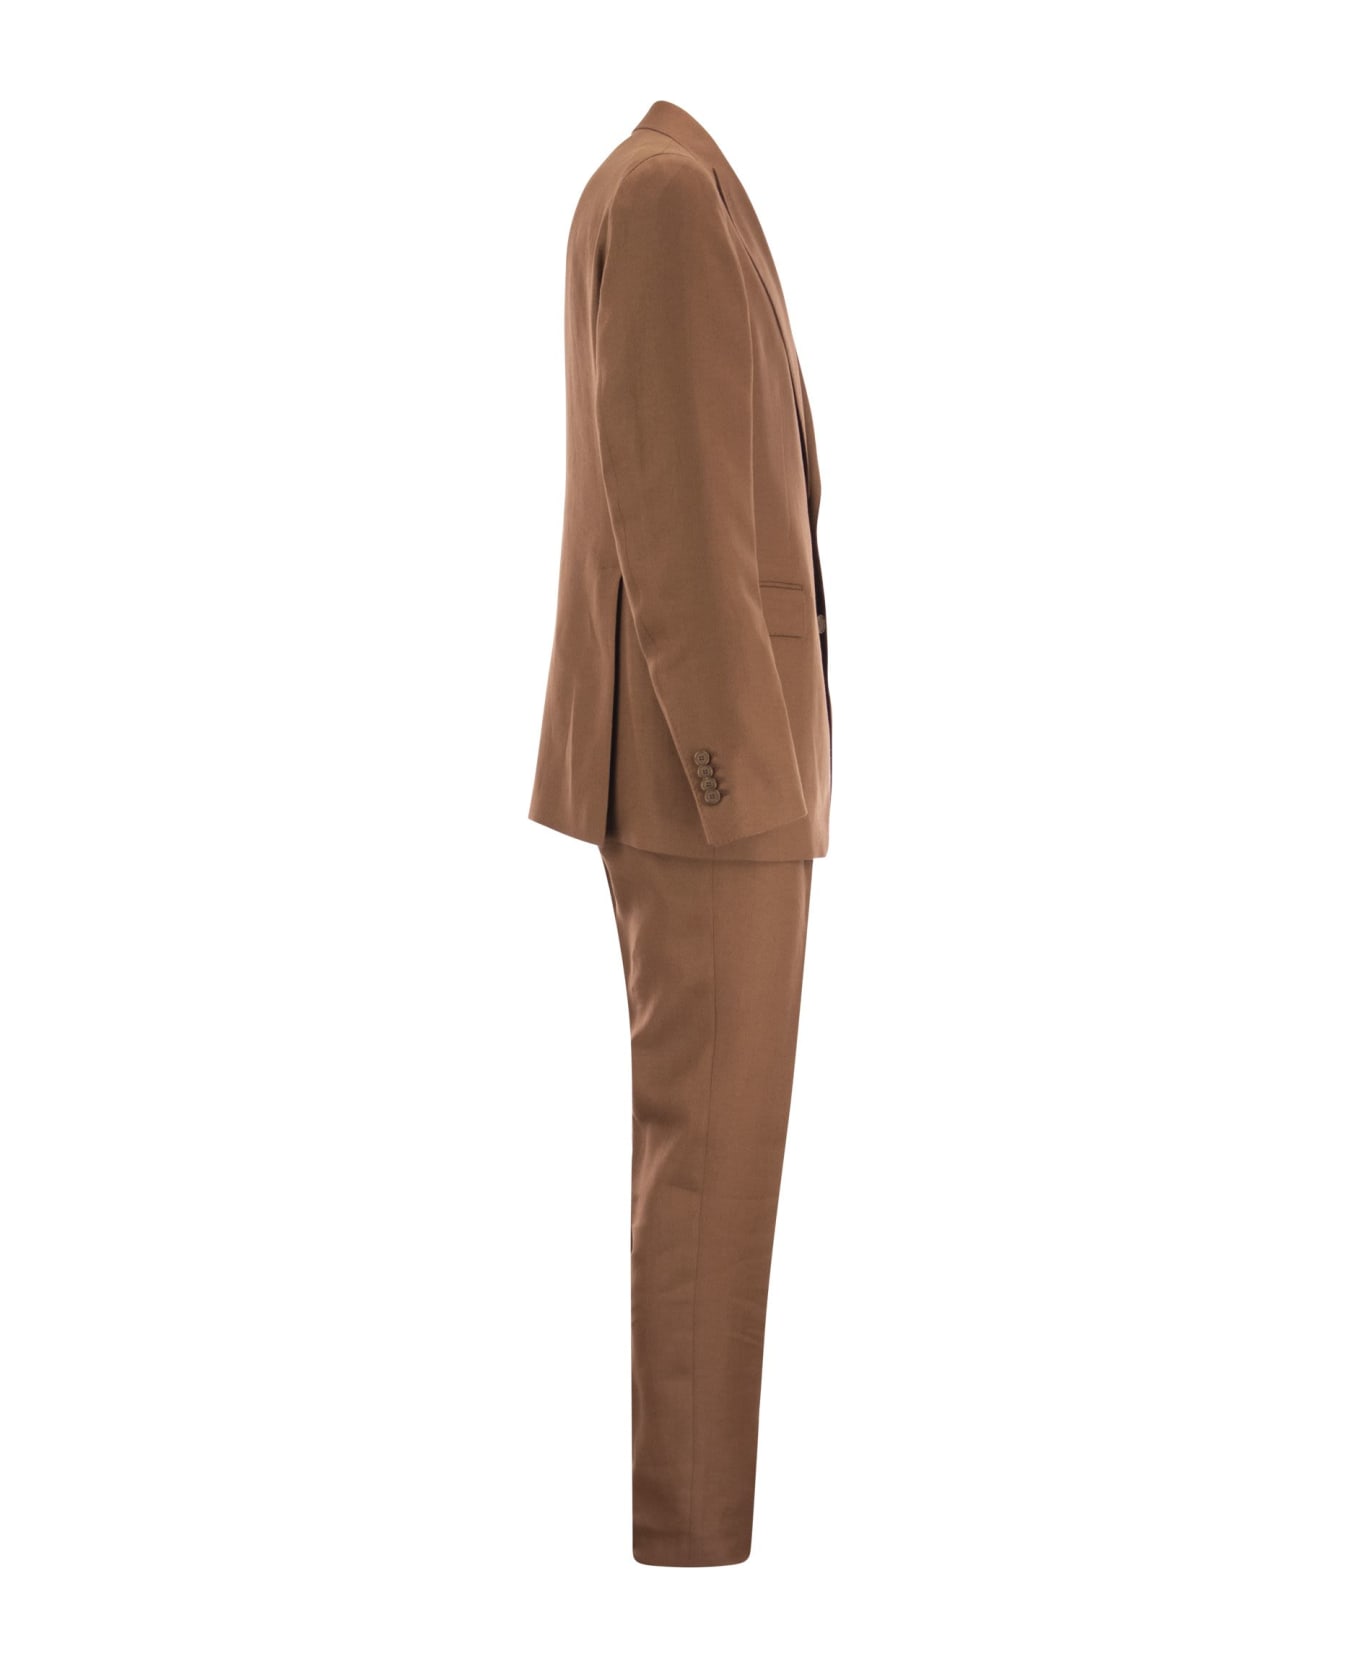 Tagliatore Linen Suit - Brown スーツ